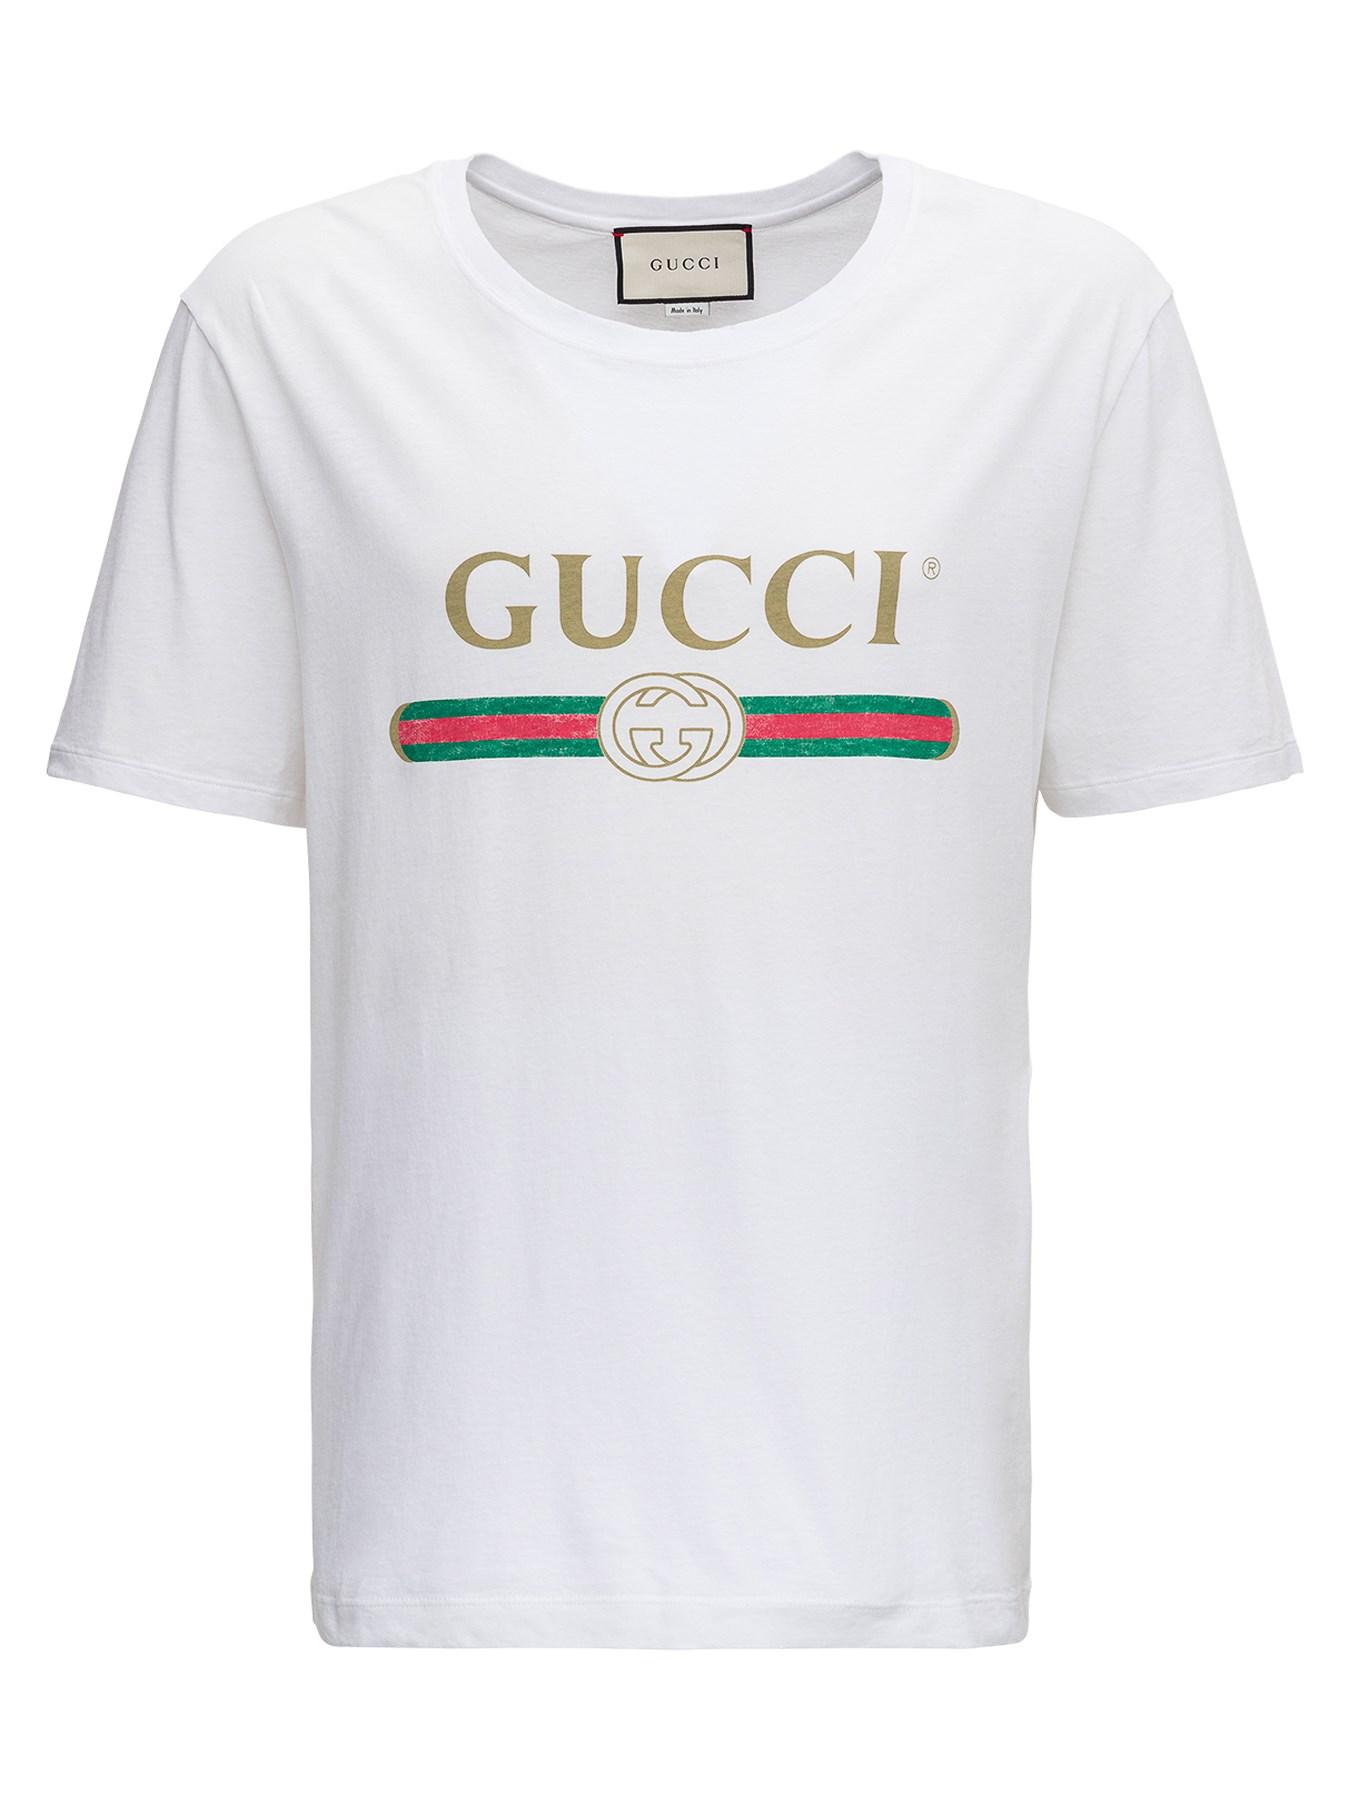 gucci white t shirt price